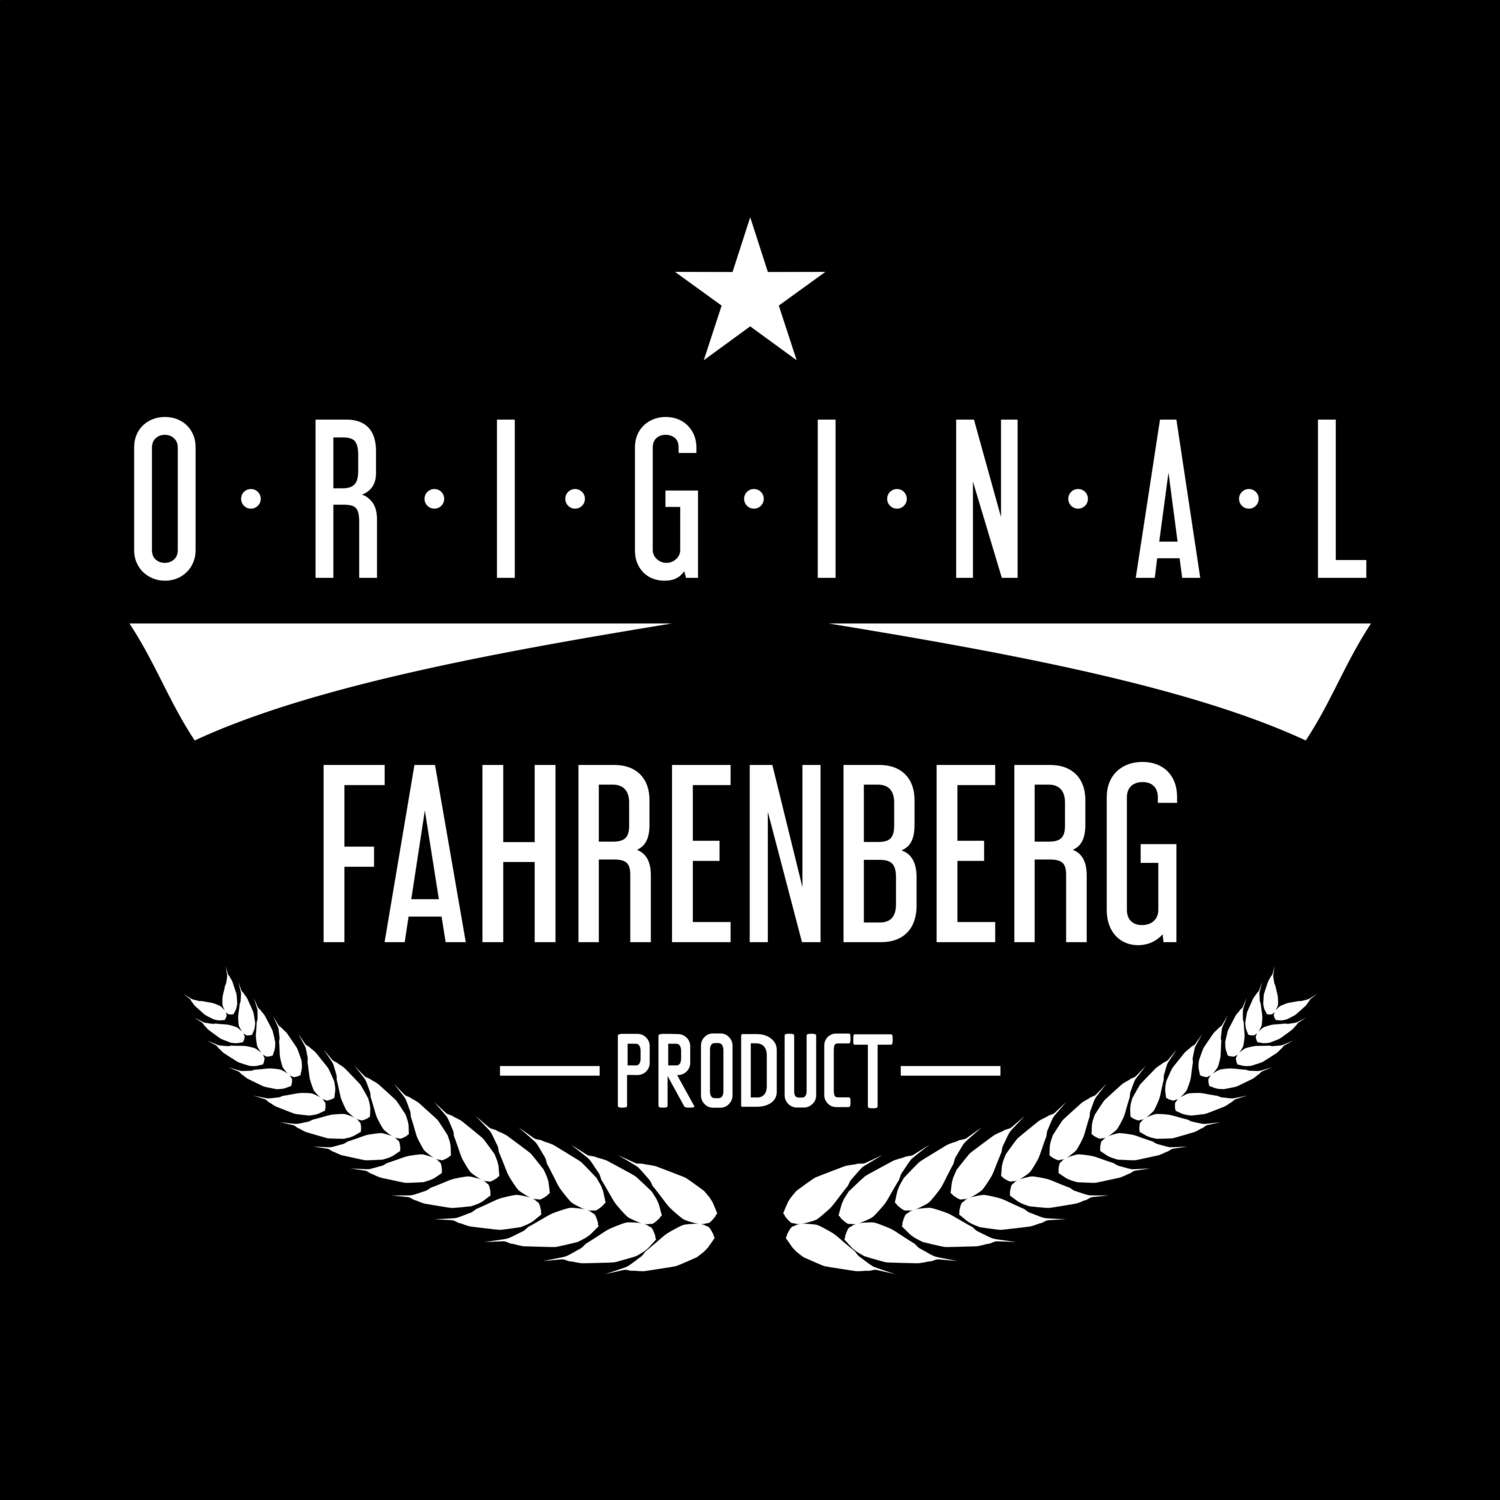 Fahrenberg T-Shirt »Original Product«